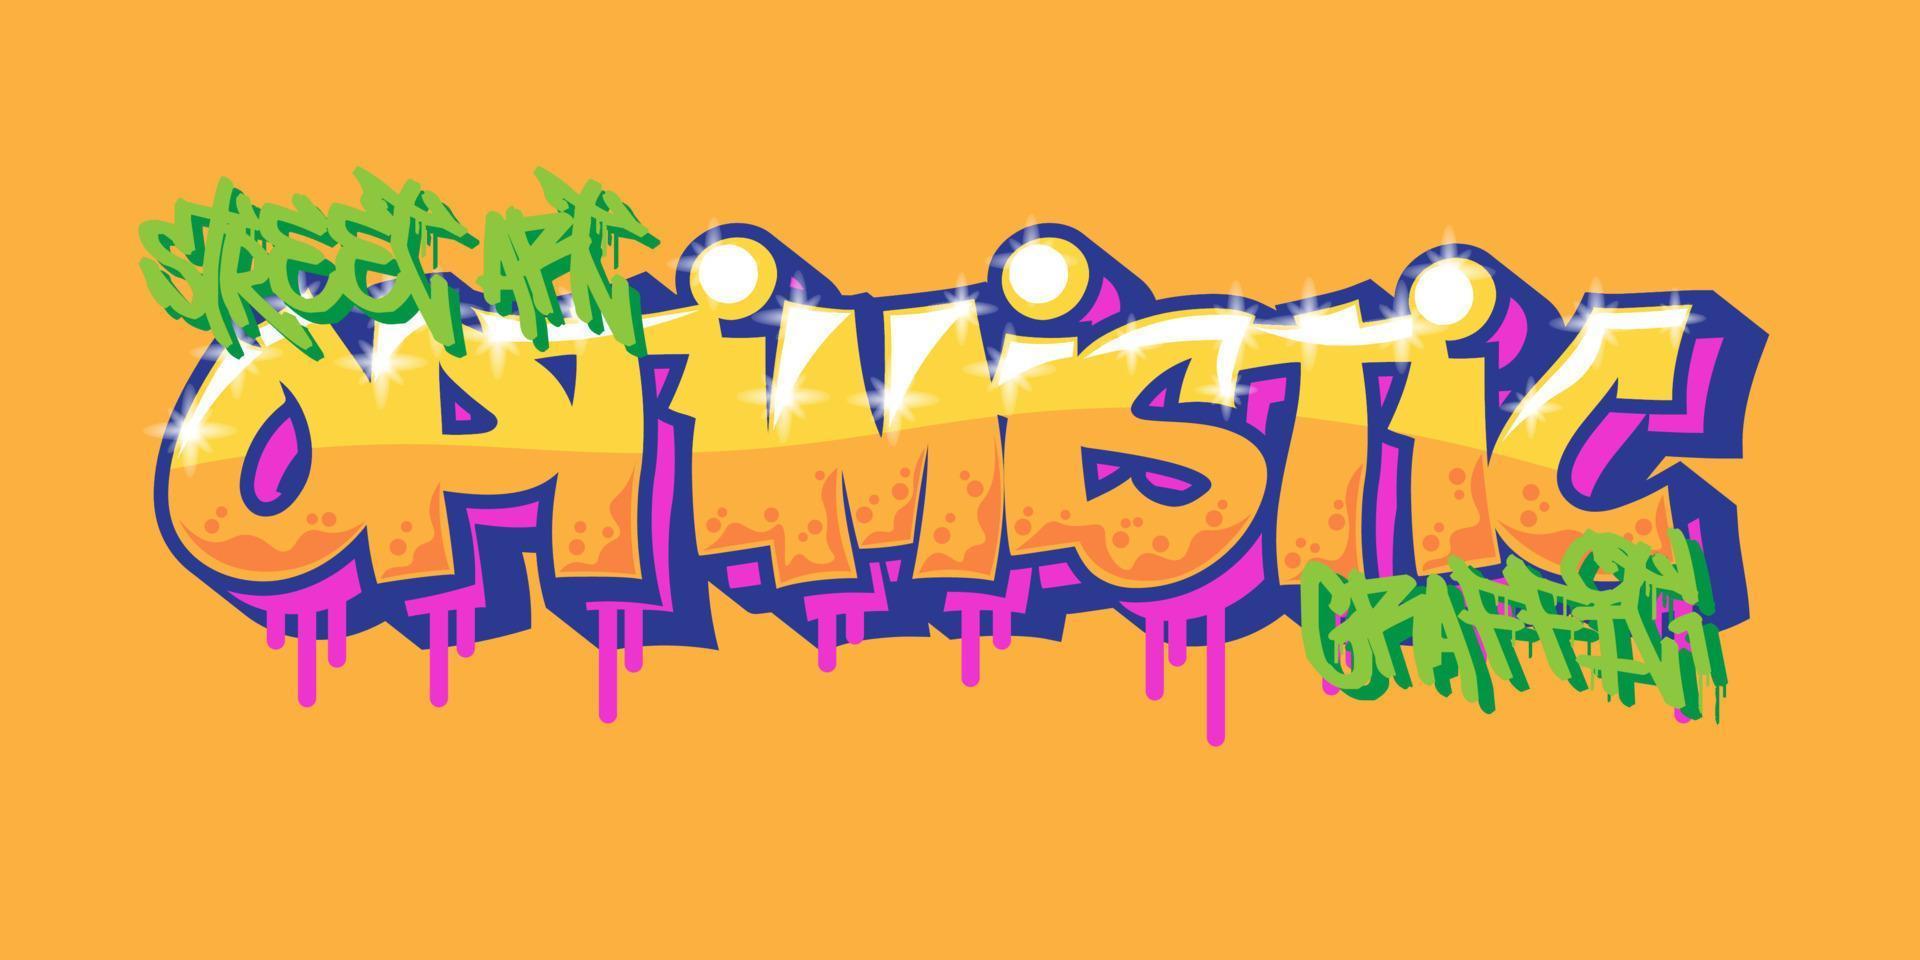 street art graffiti optimiste motivation citation vecteur